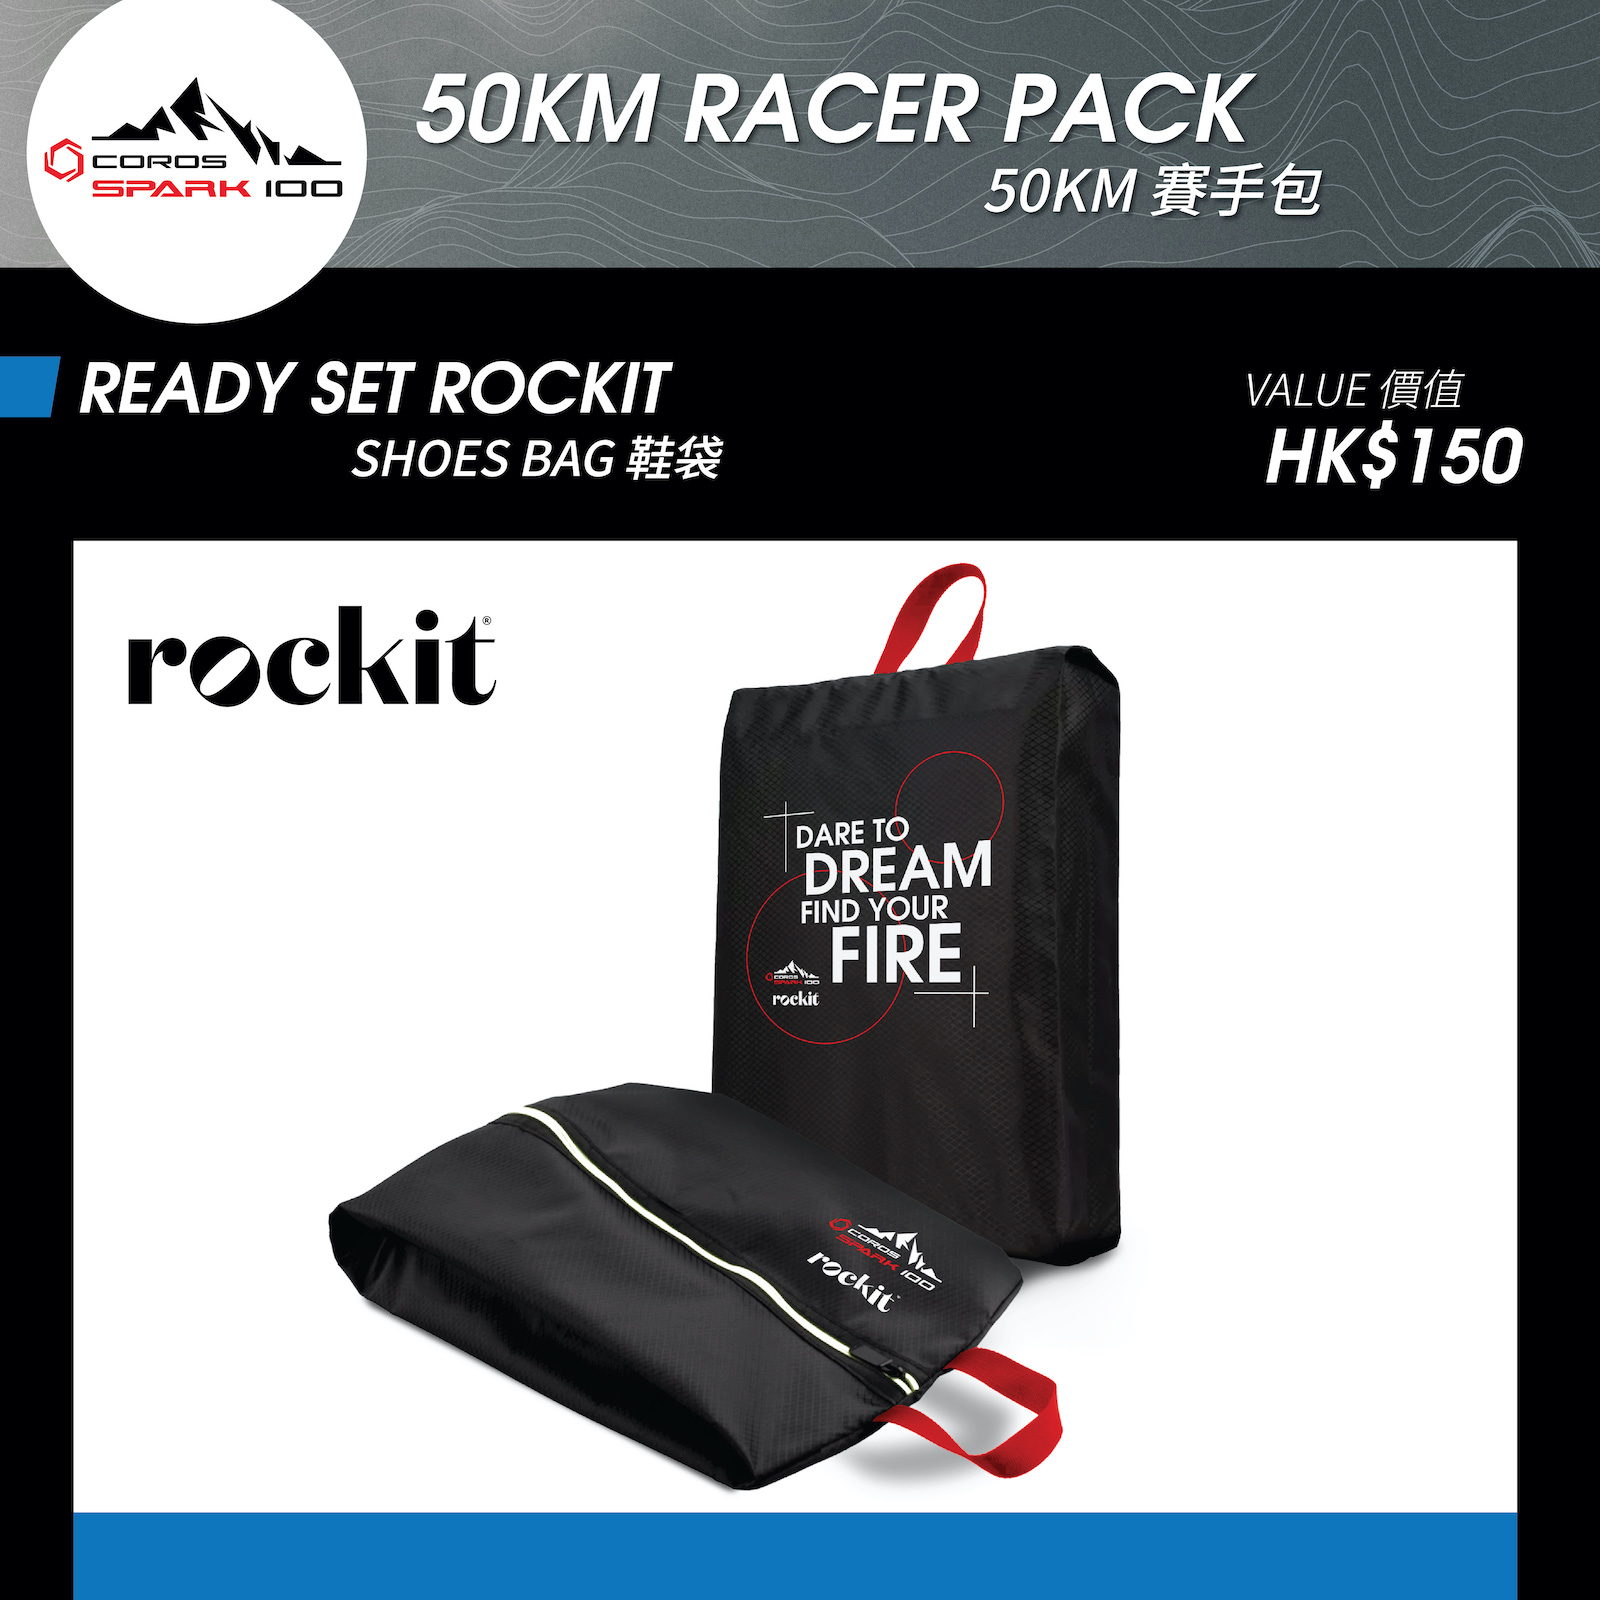 READY SET ROCKIT - Shoe bags (Value: HK$150)